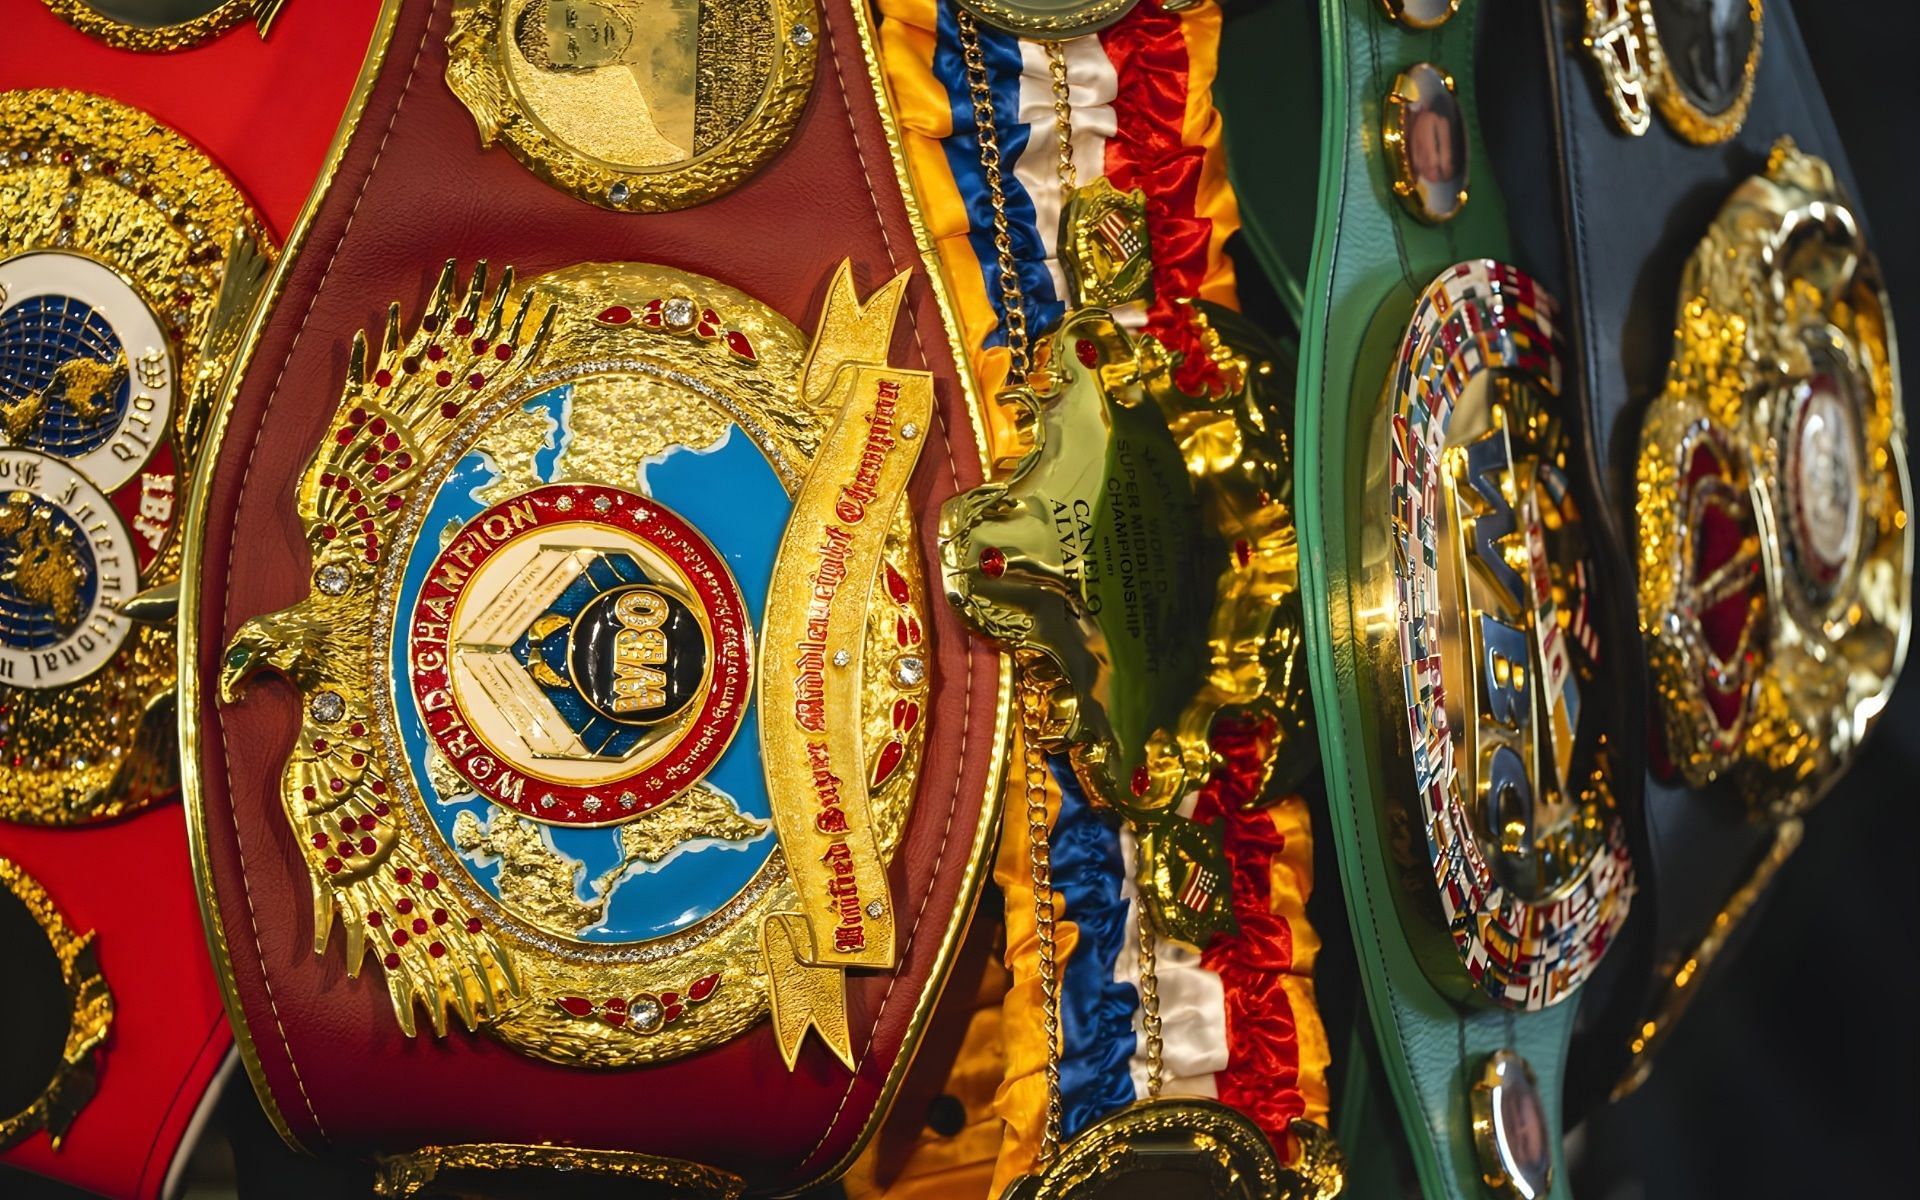 4 Major Boxing Belts And Organizations Explained: WBA, WBC, IBF